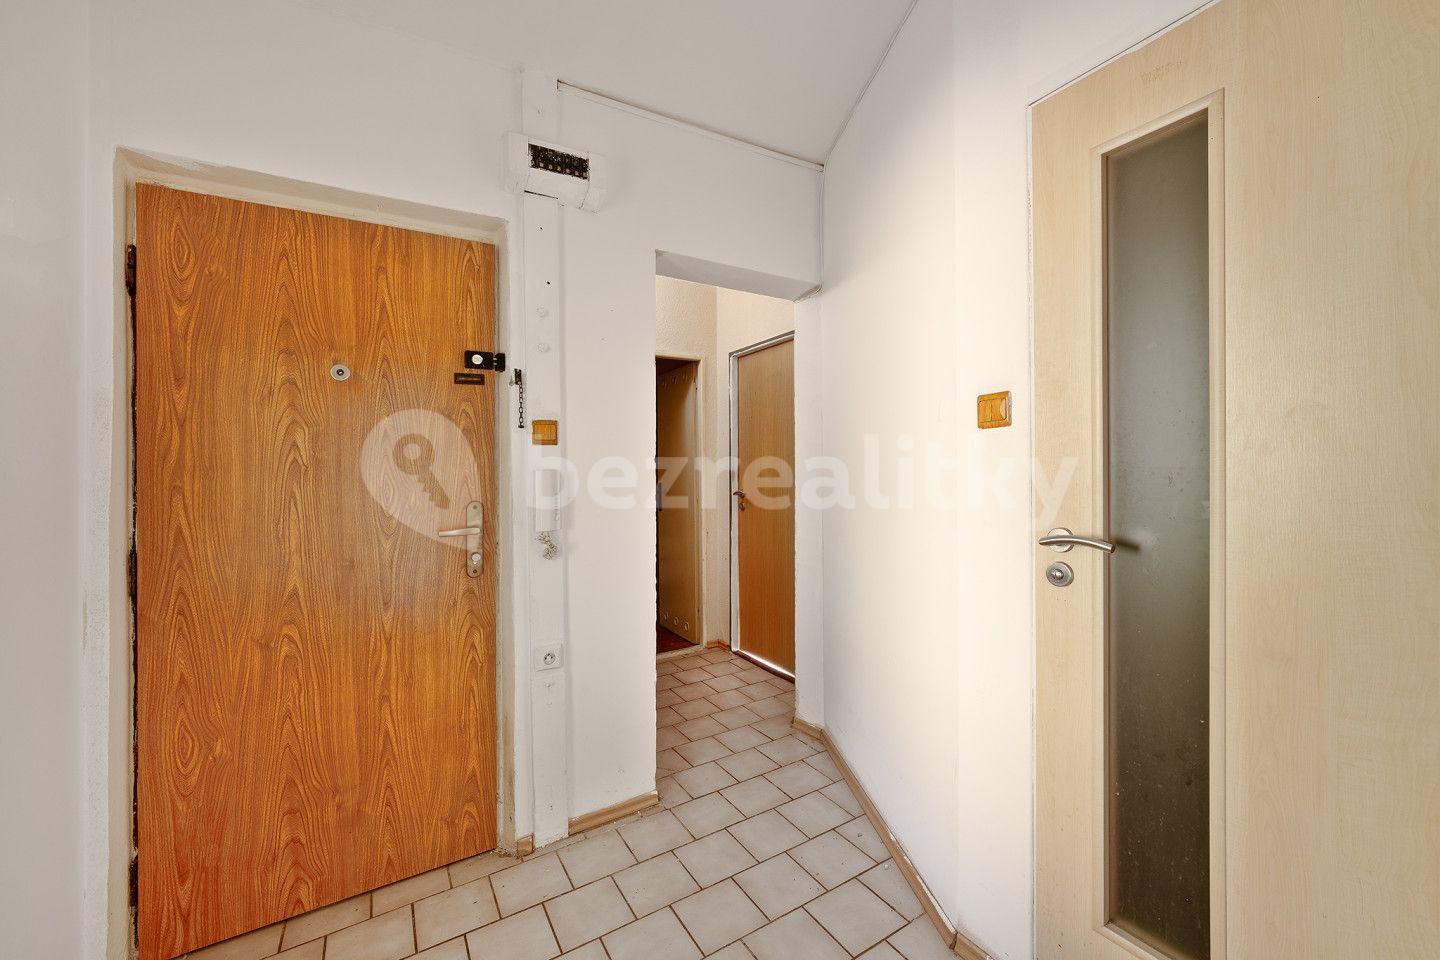 4 bedroom flat for sale, 78 m², Luční, Litvínov, Ústecký Region